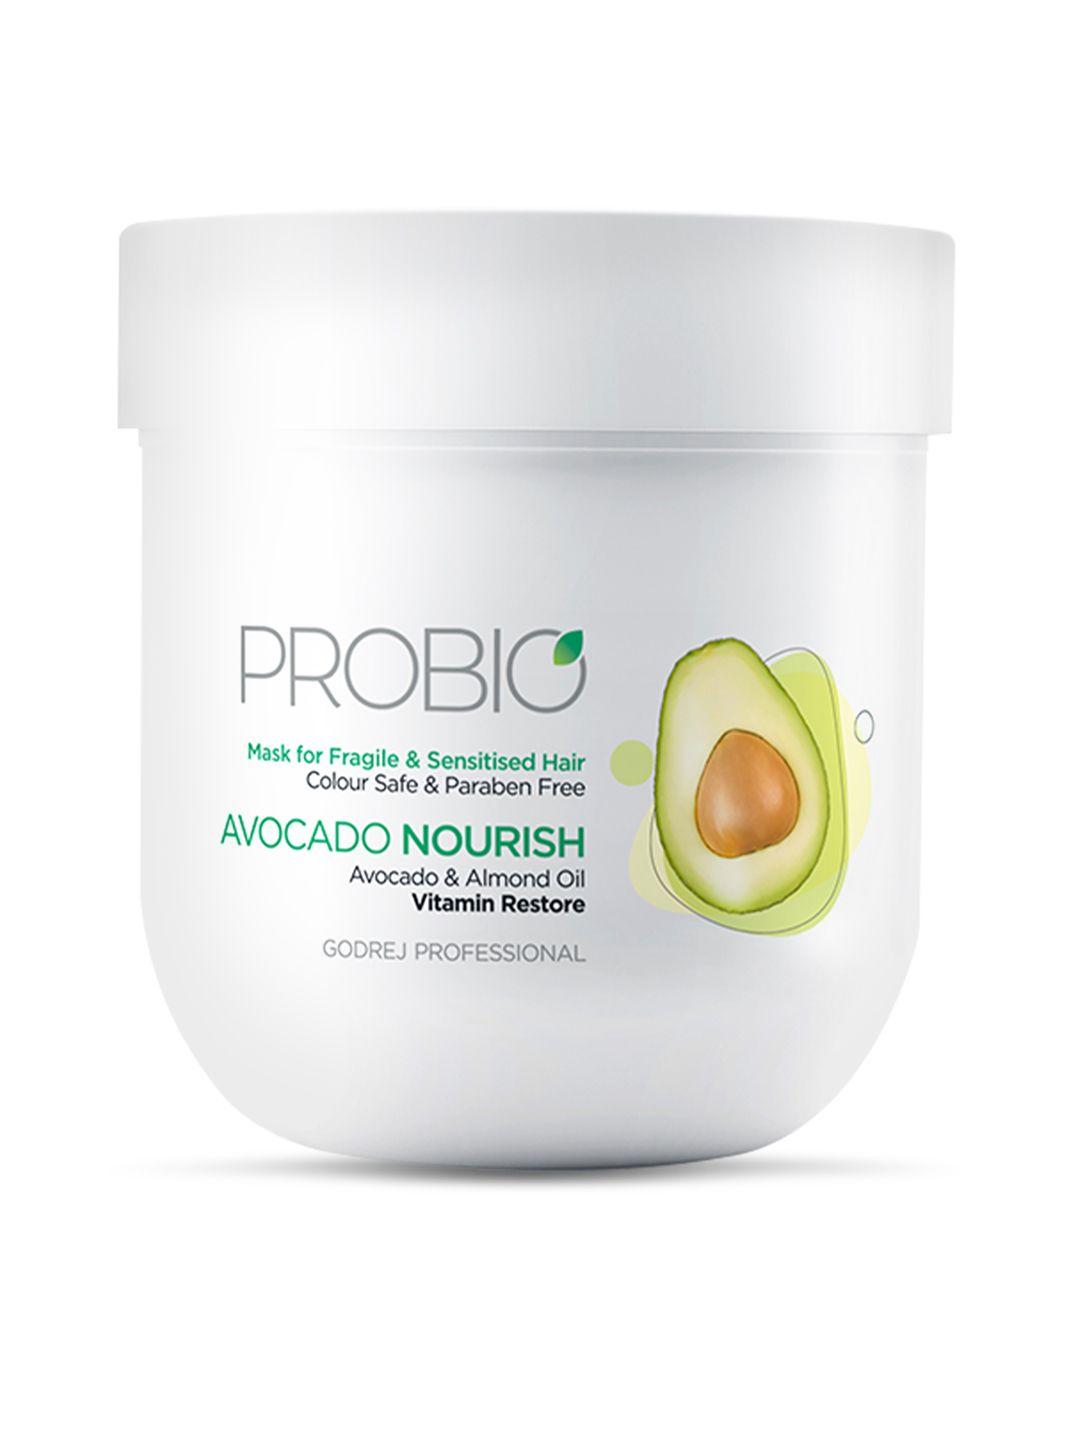 godrej professional probio avocado nourish mask for fragile & sensitised hair - 200 g